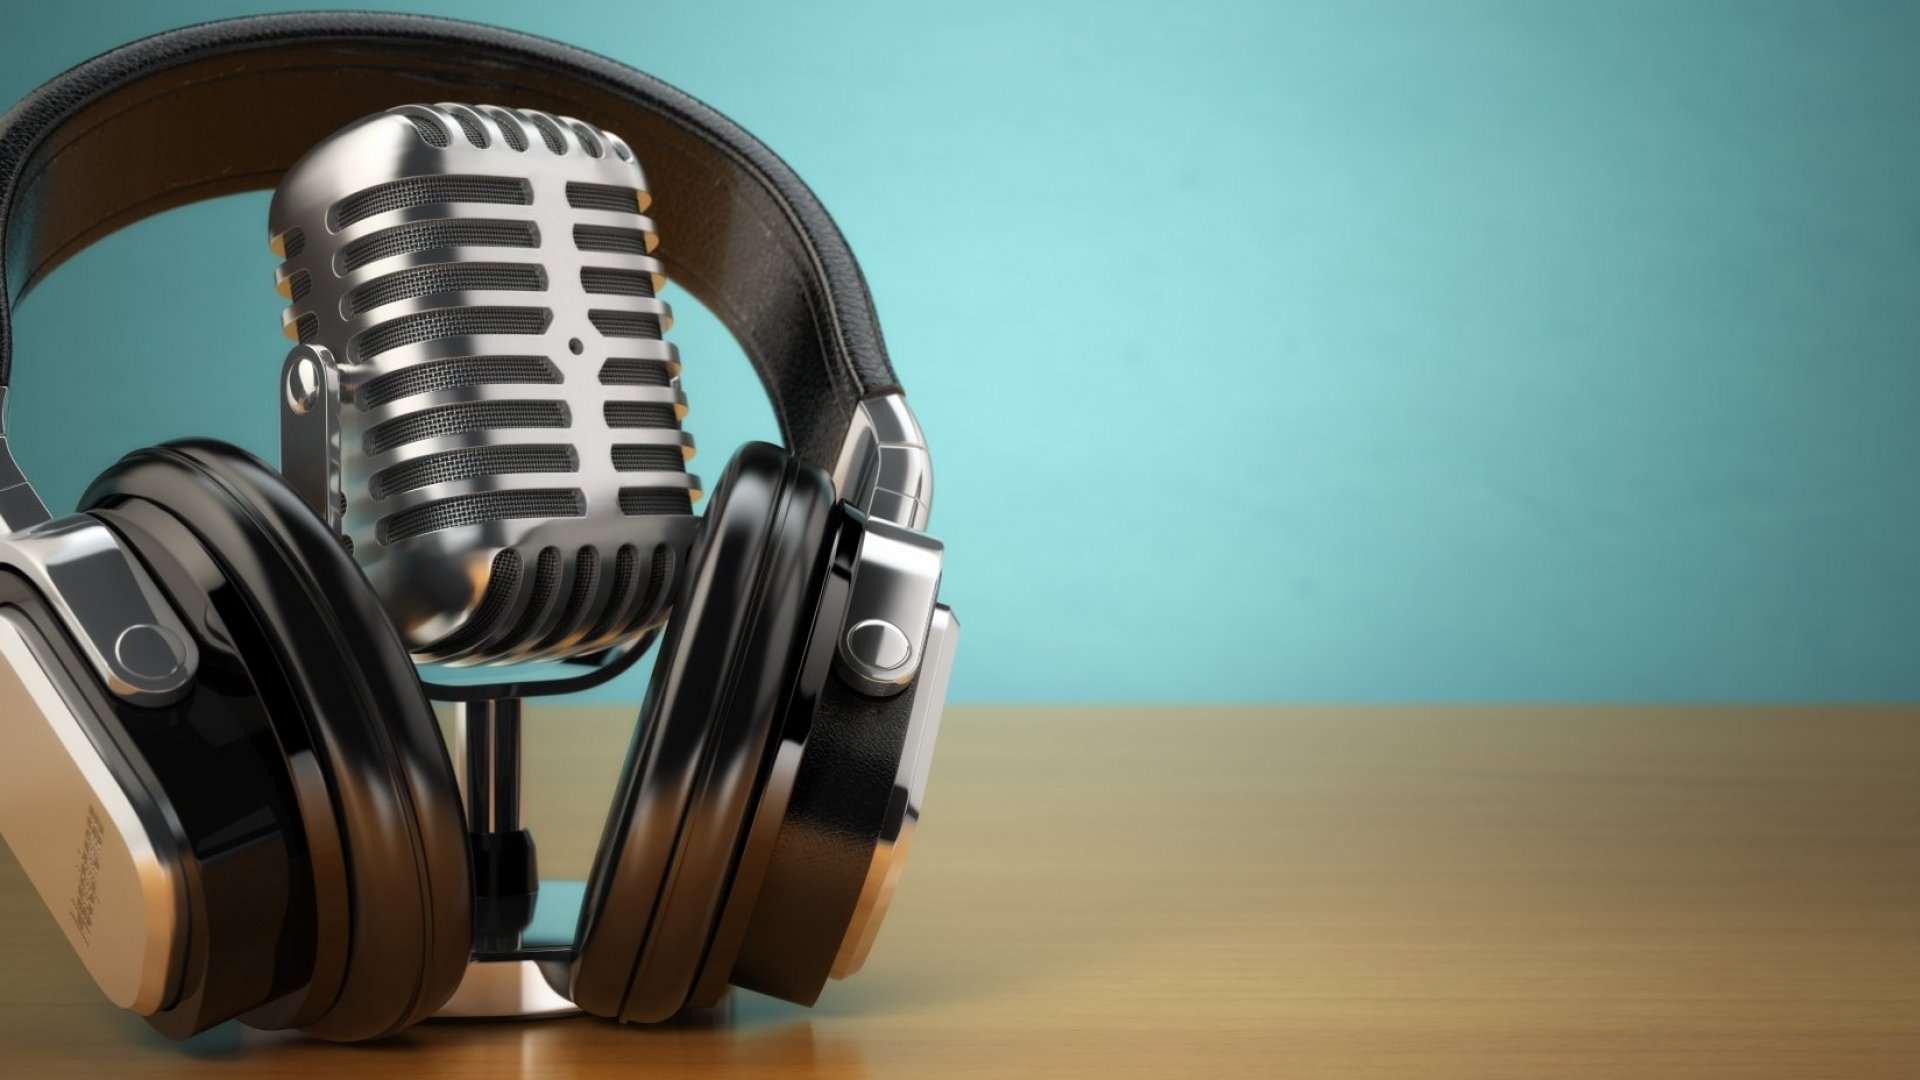 See the Best Podcast Hosting Platforms